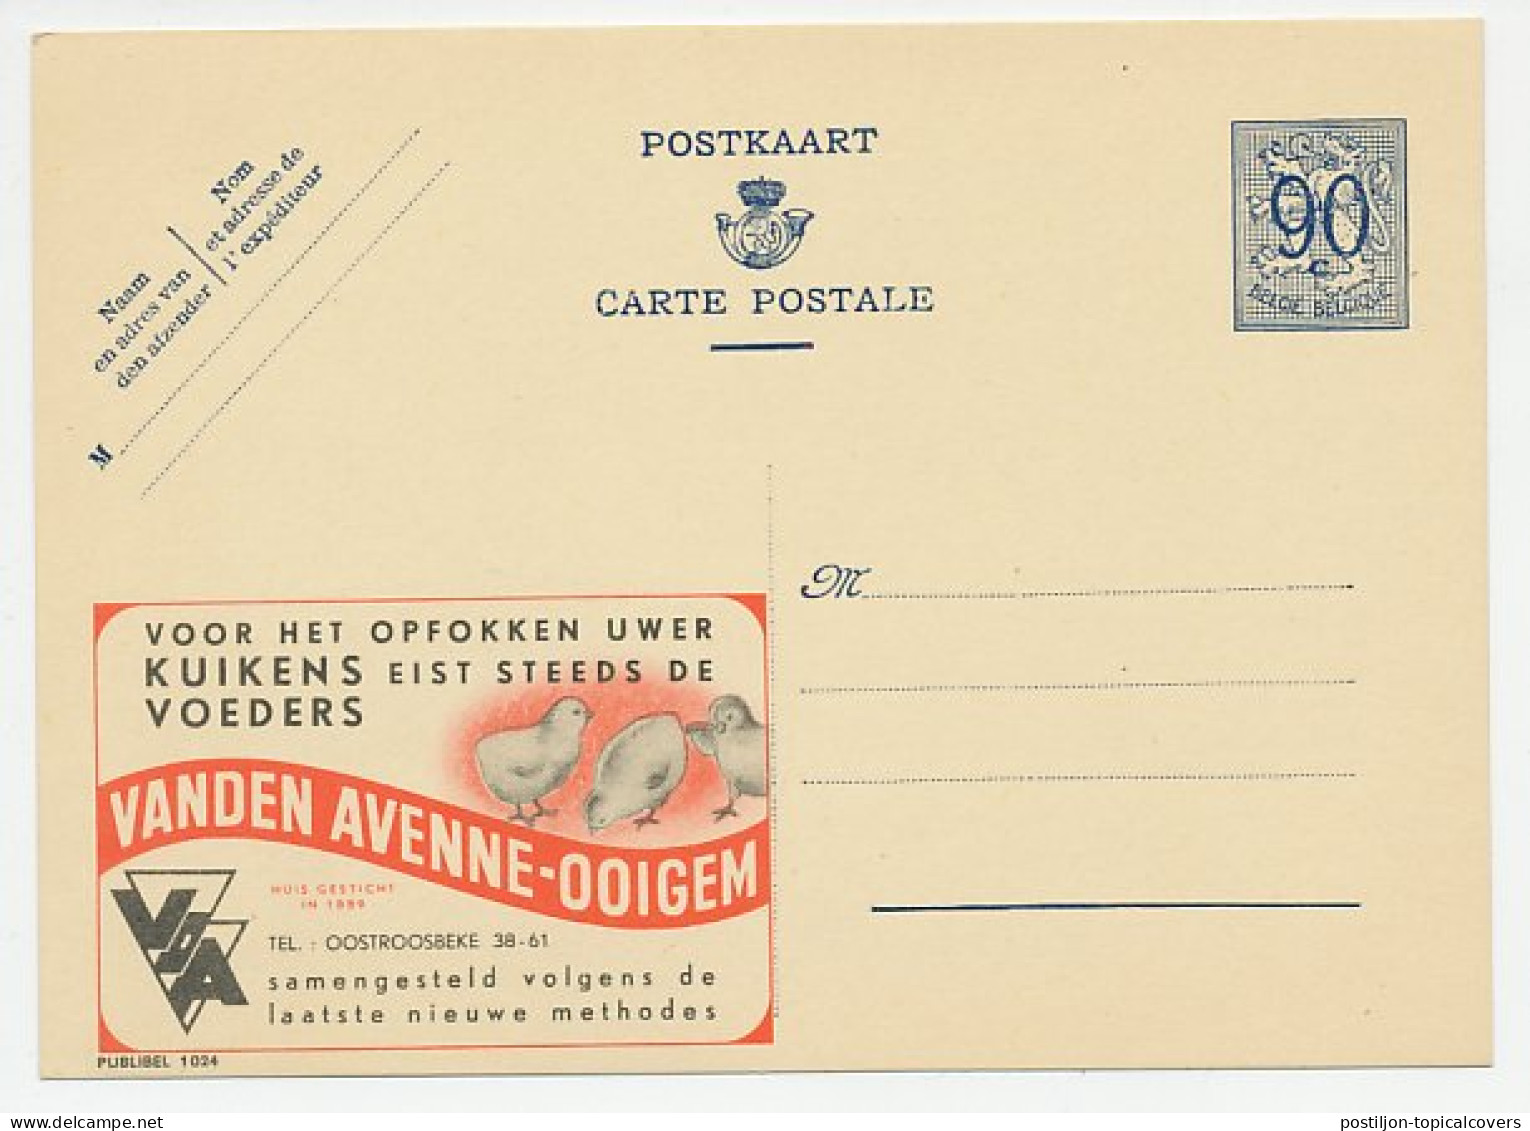 Publibel - Postal Stationery Belgium 1951 Chickens - Rearing - Farm